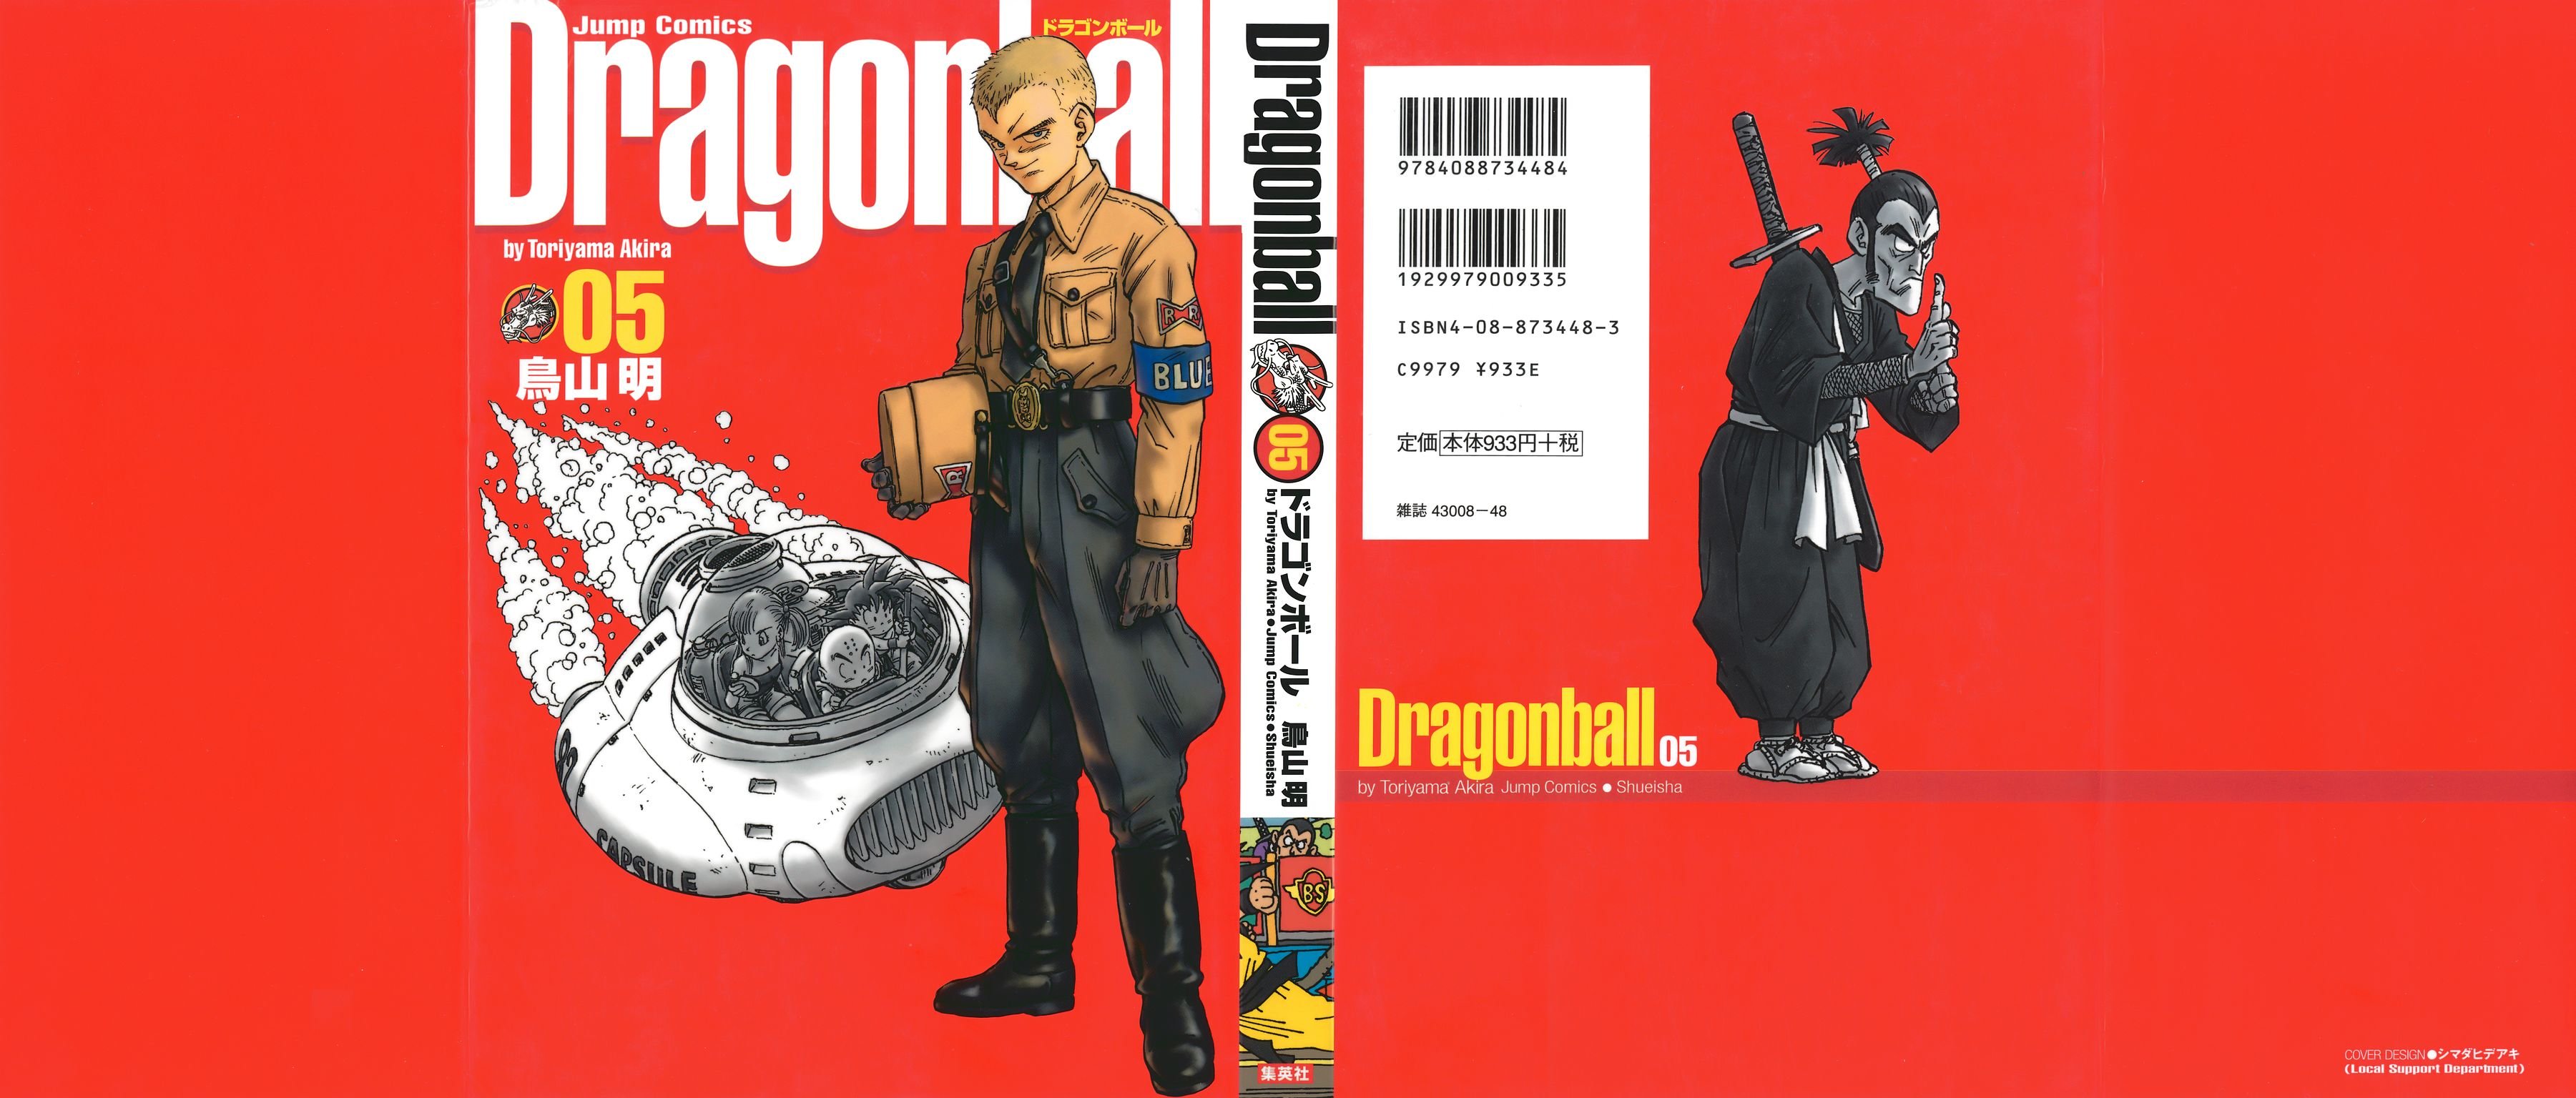 dragonballmangacover11.jpg